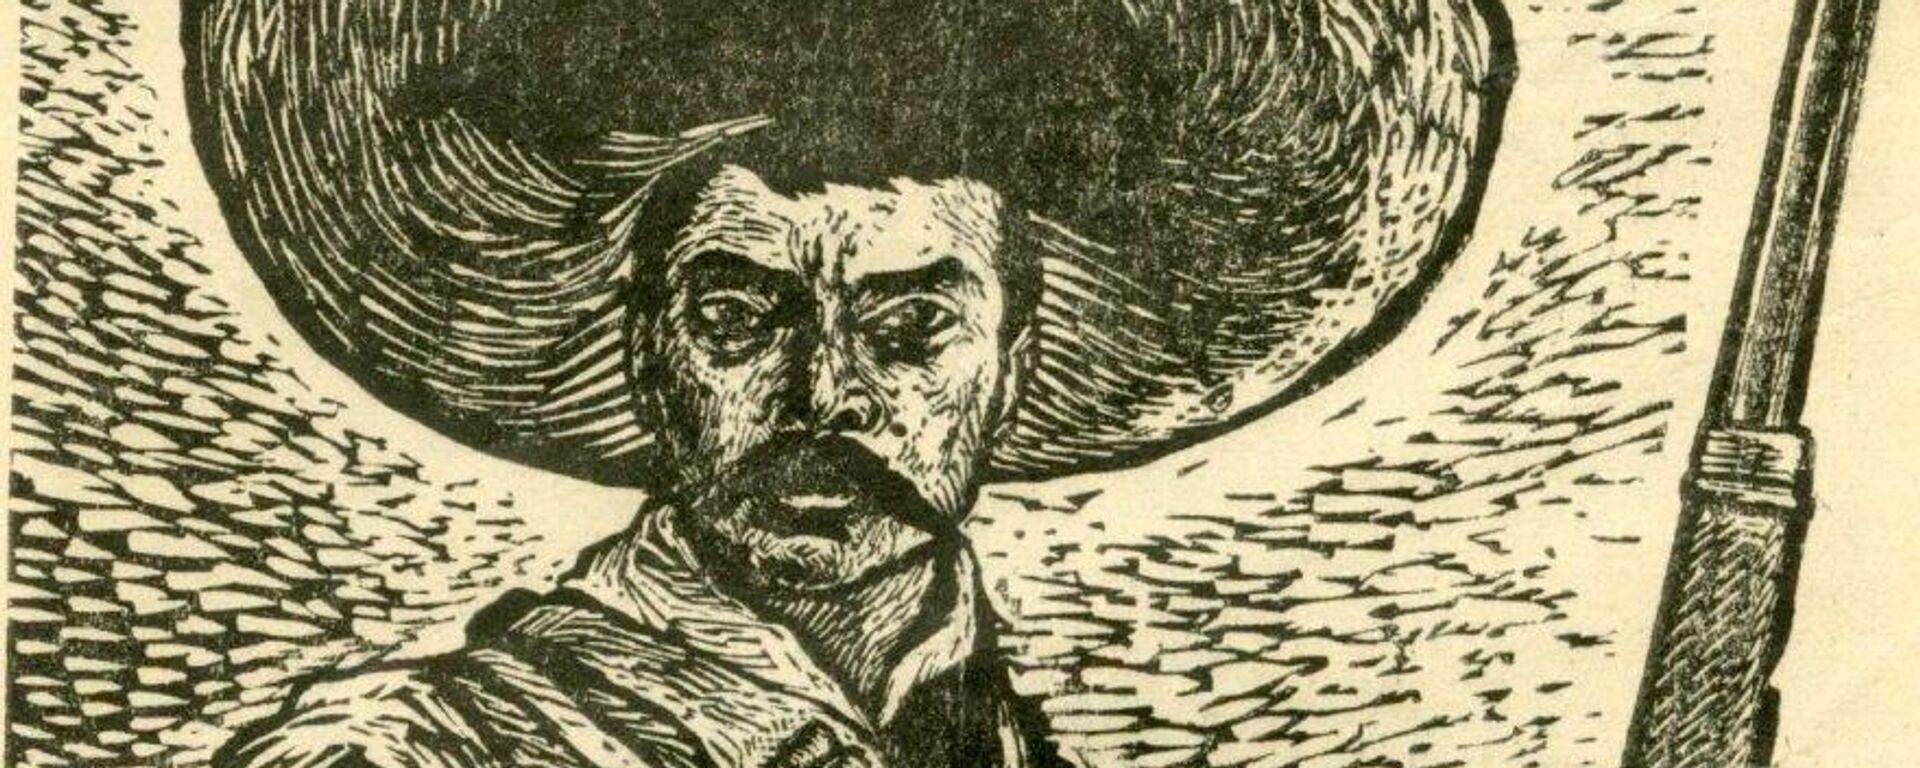 Emiliano Zapata, caudillo del sur durante la Revolución mexicana. - Sputnik Mundo, 1920, 19.11.2021